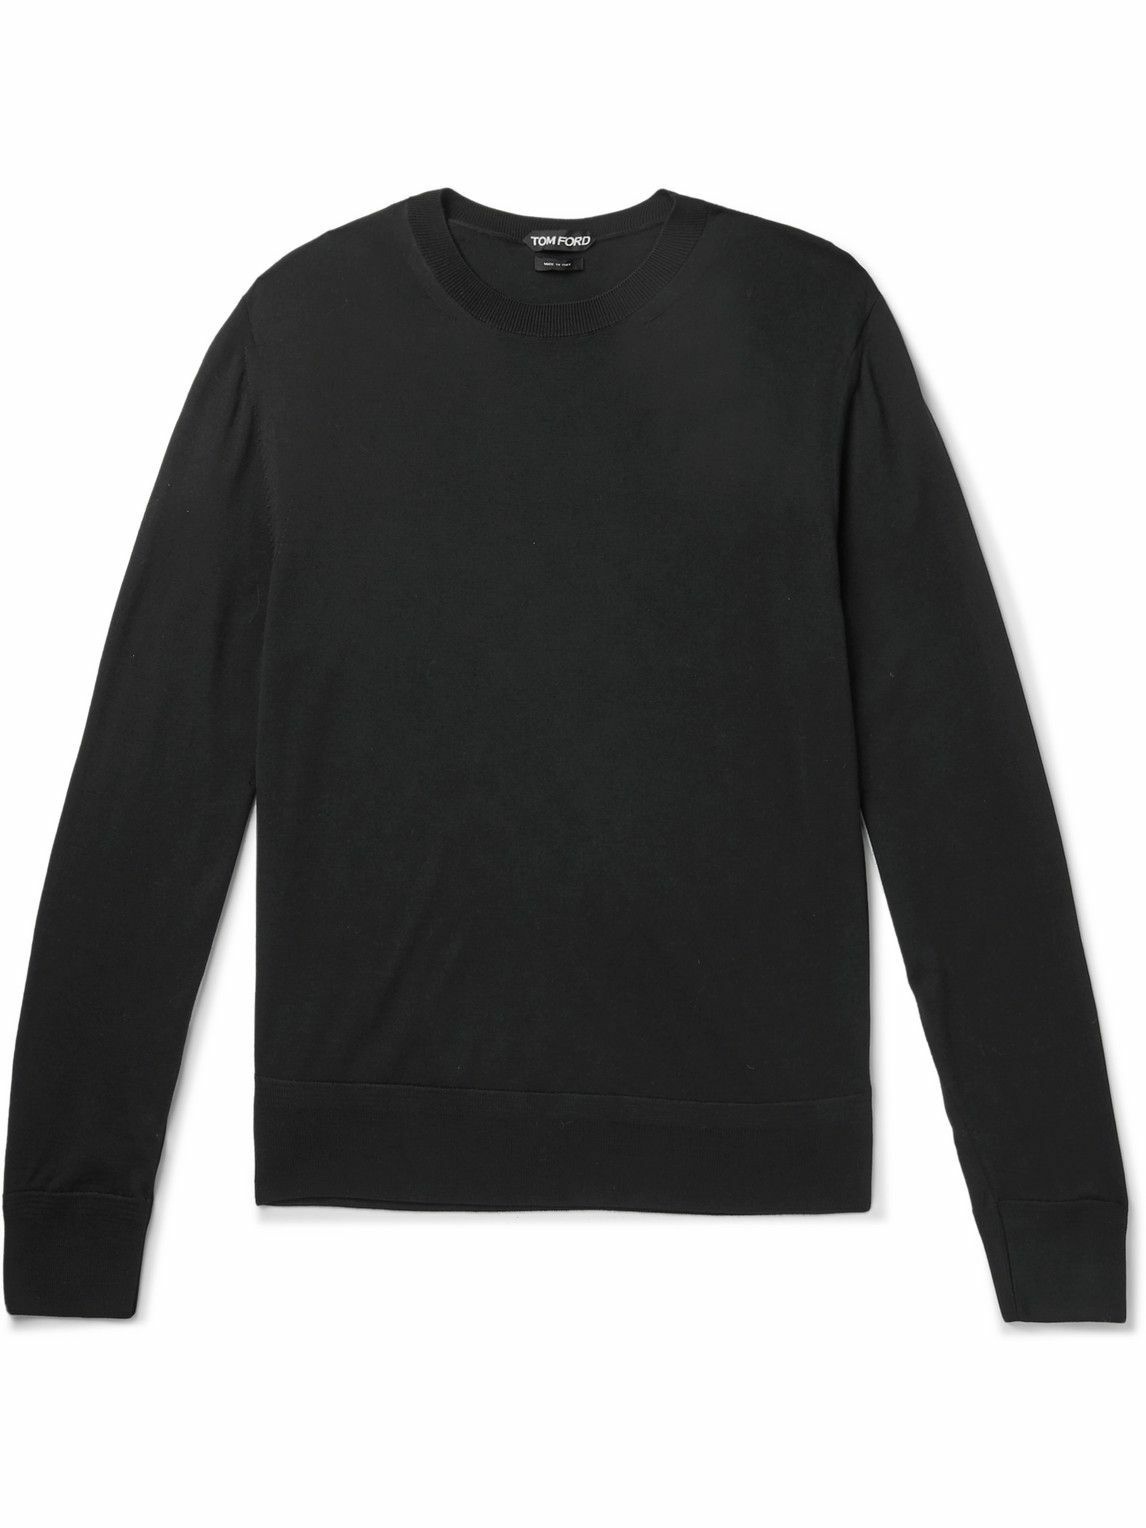 TOM FORD - Slim-Fit Wool Sweater - Black TOM FORD